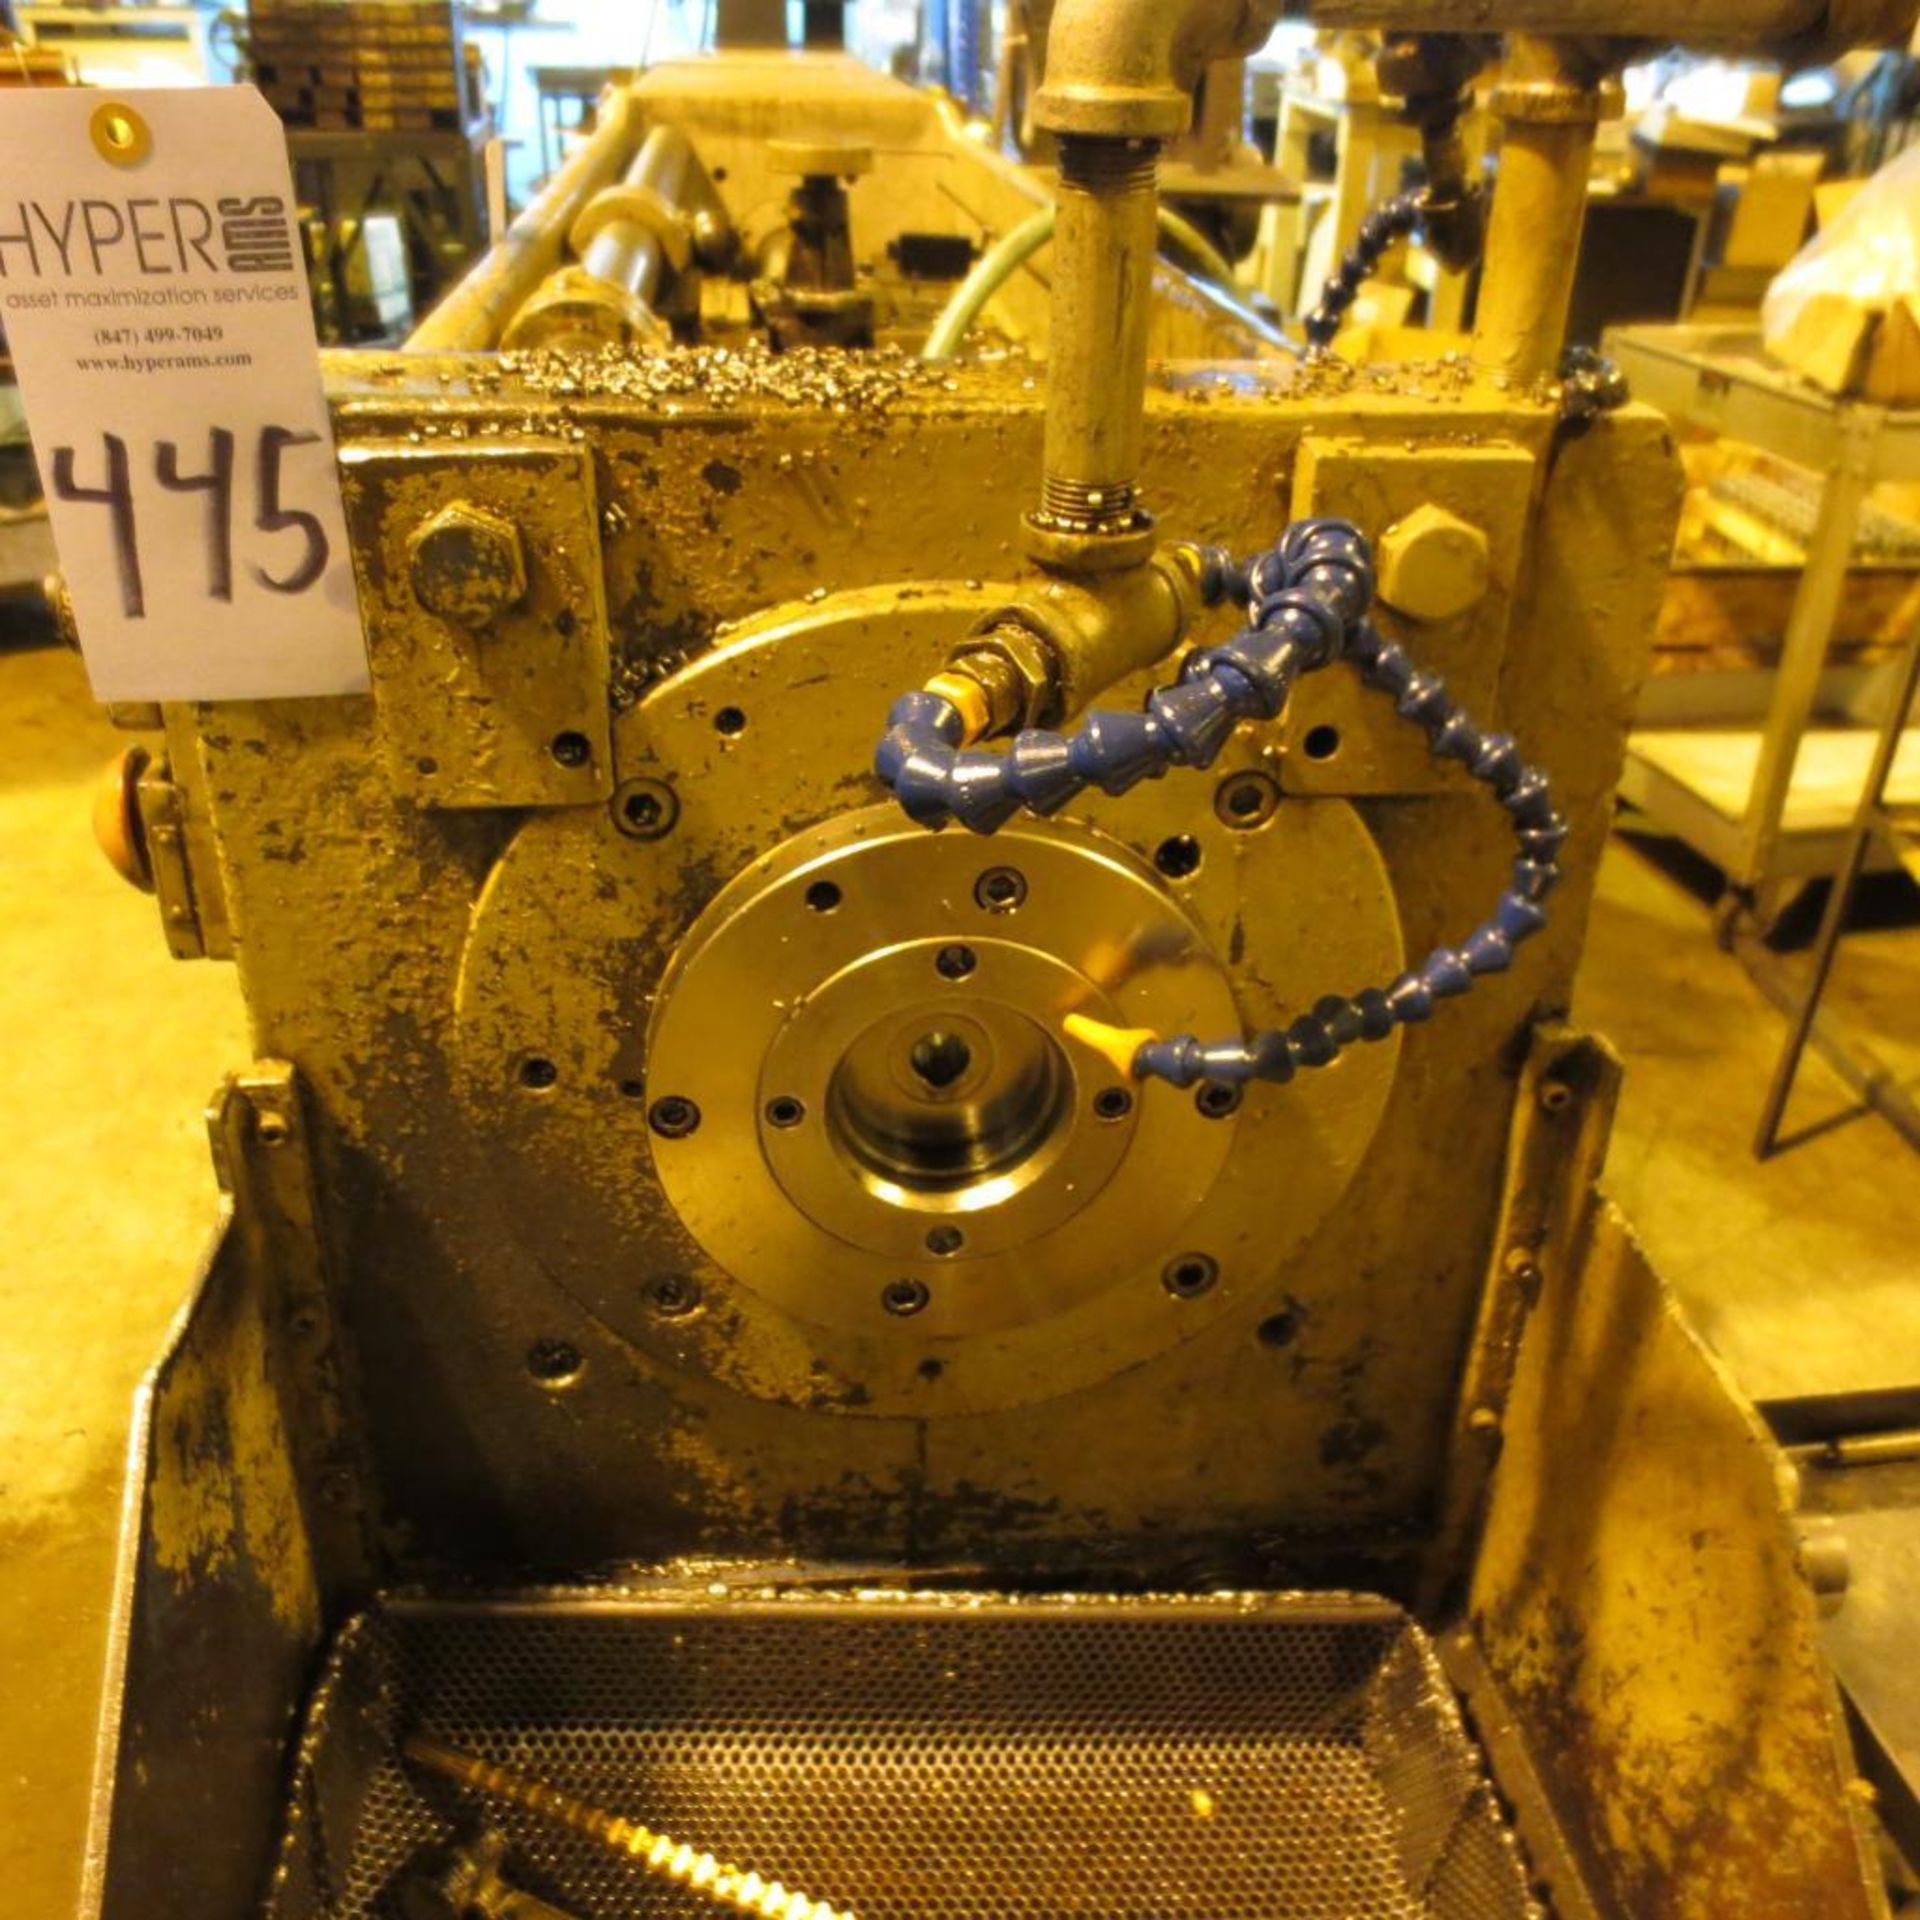 Oil Gear 50 Ton (est) Type XL20 Horizontal Hydraulic Broaching Machine S/N 21950 *RIGGING $250* - Image 3 of 6